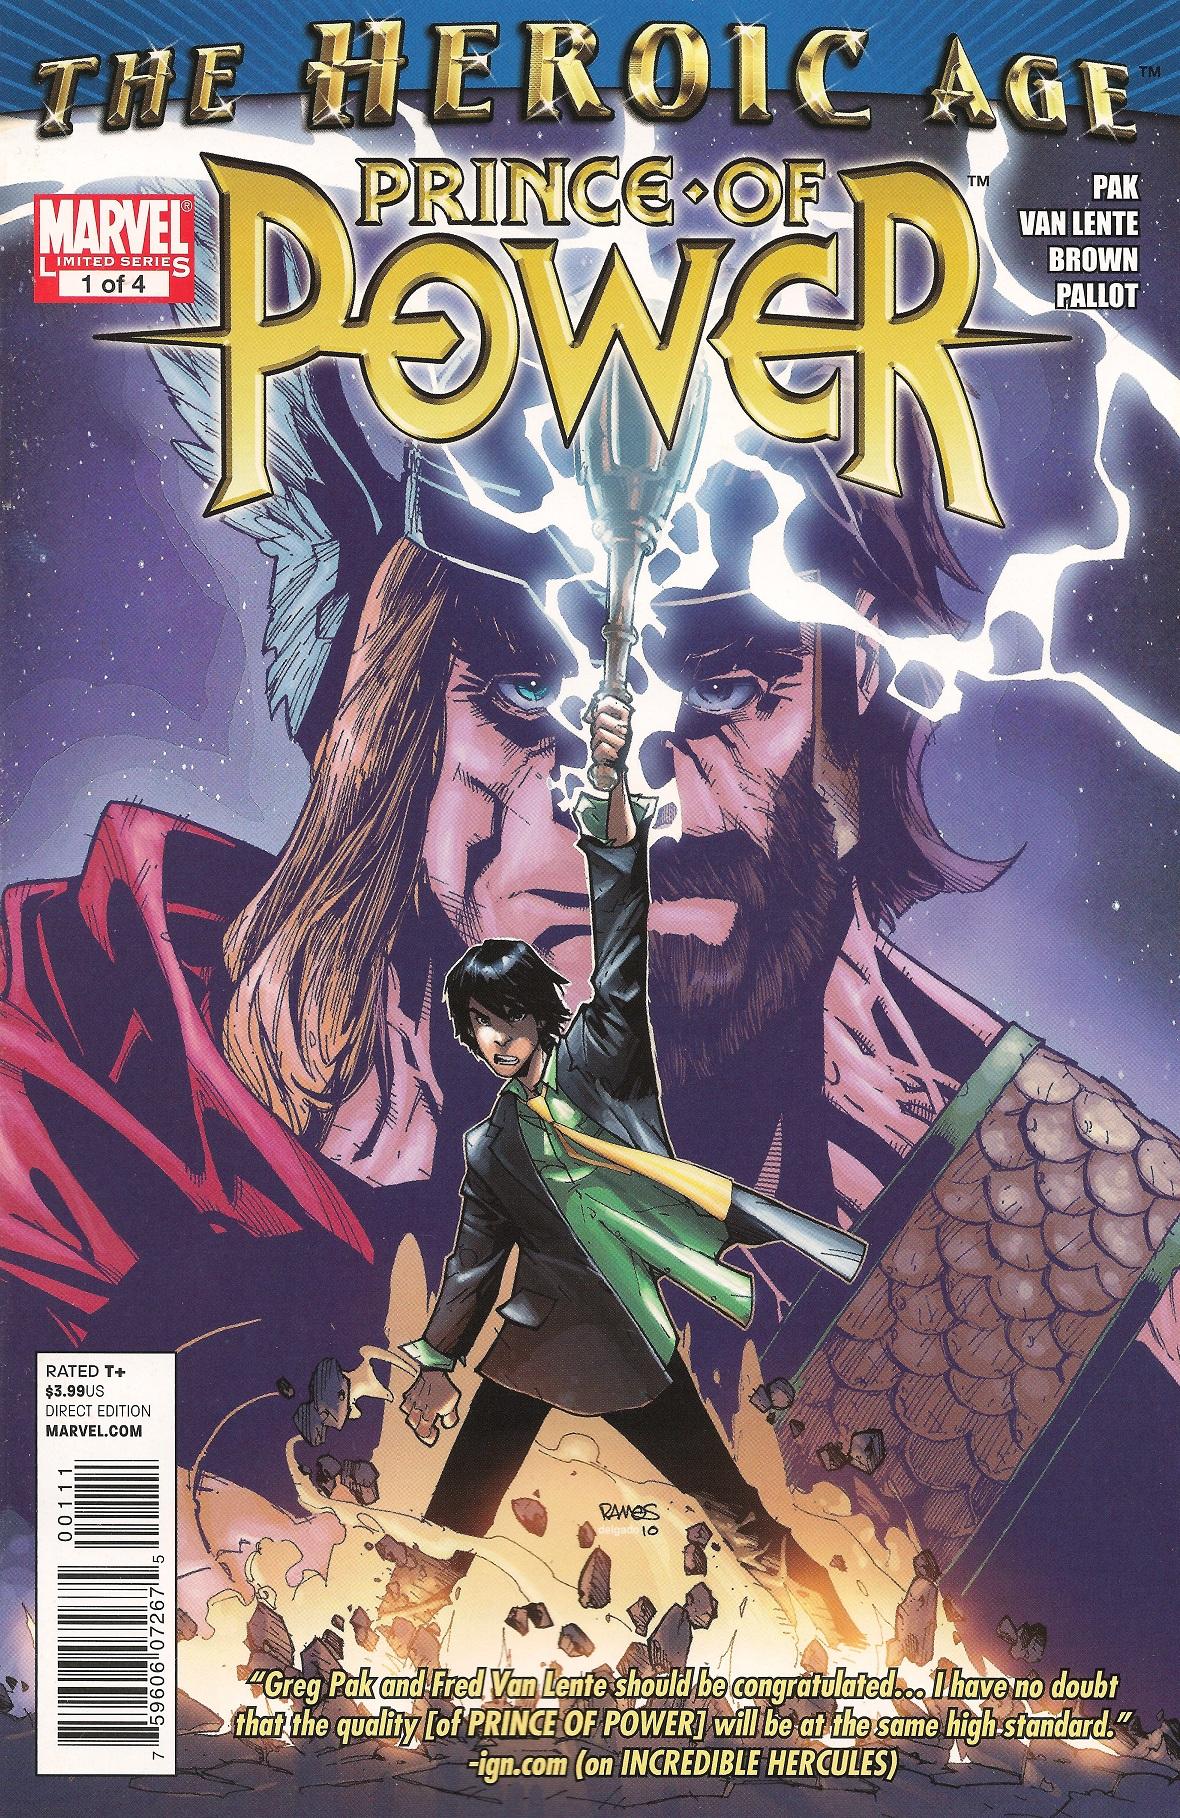 Heroic Age: Prince of Power Vol. 1 #1